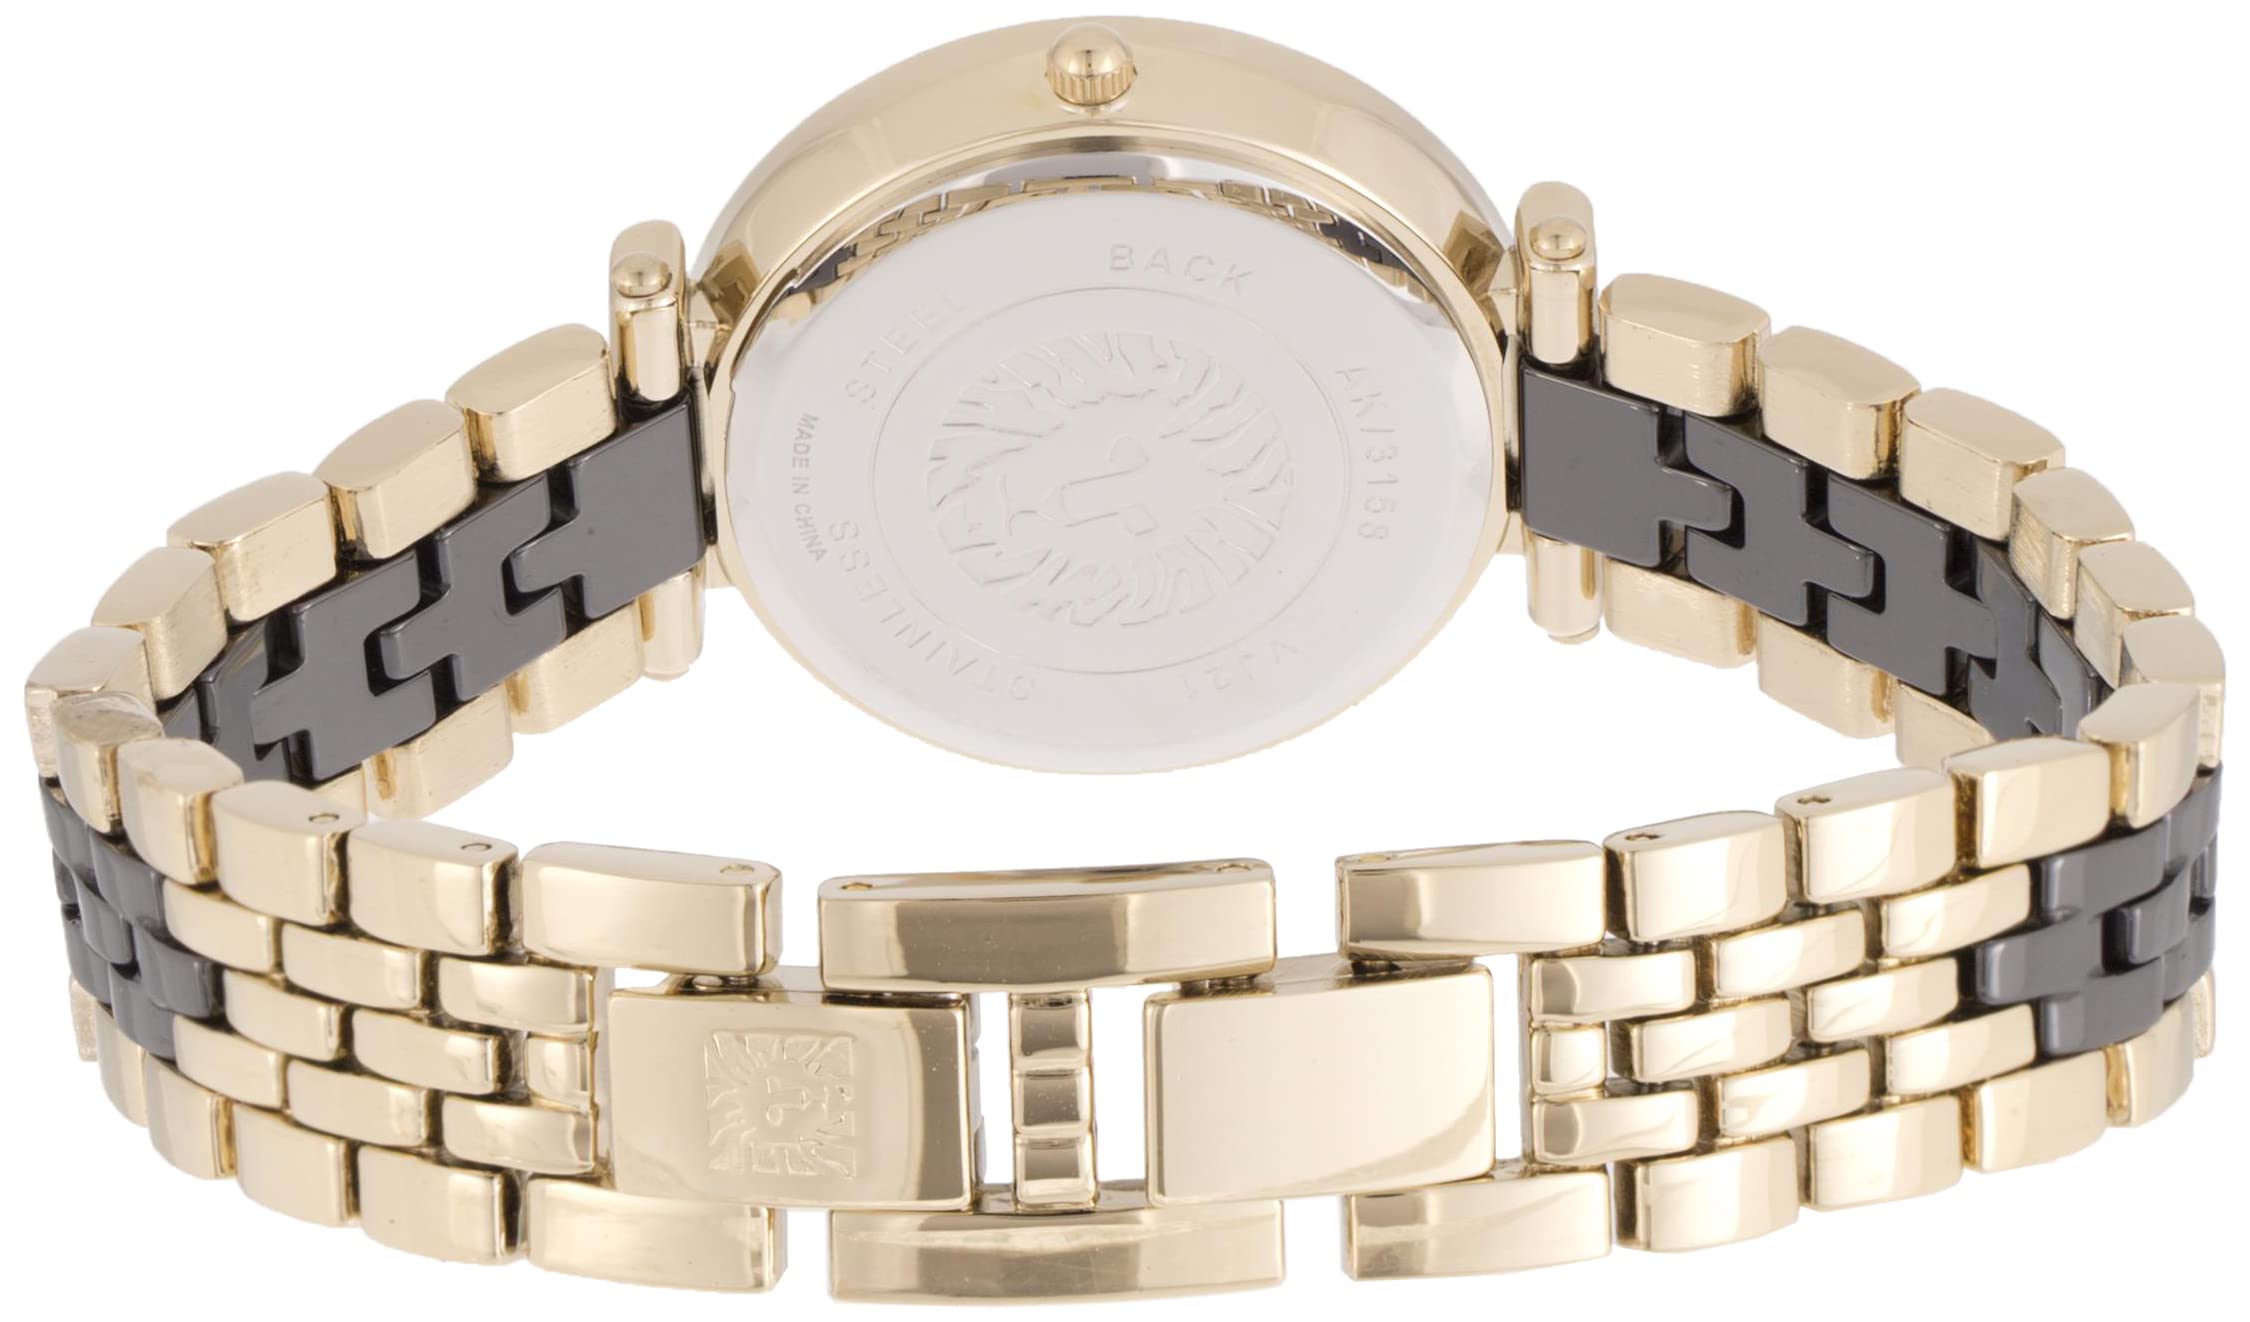 Anne Klein Women's Genuine Diamond Ceramic Bracelet Watch